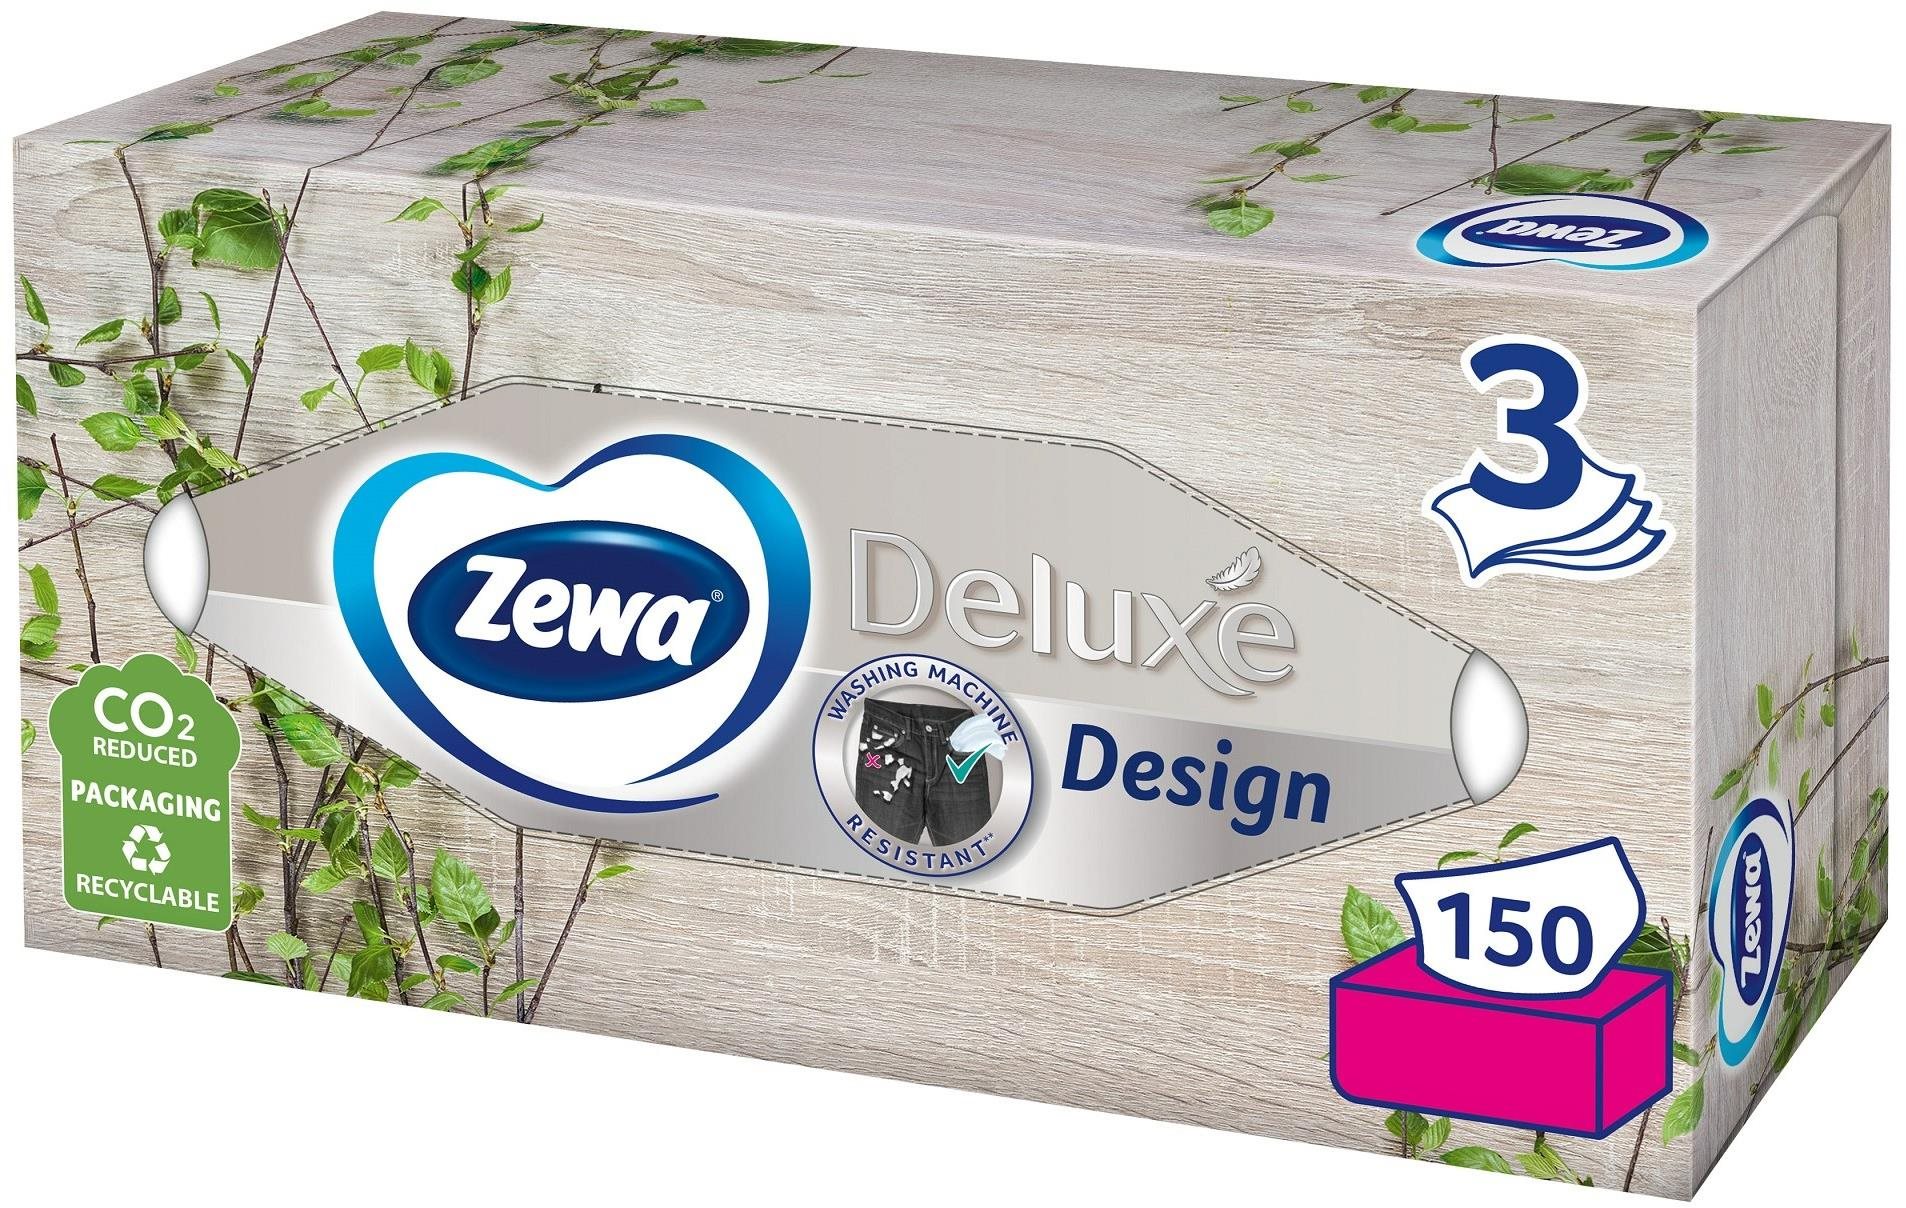 Papírzsebkendő ZEWA Deluxe Design Big Pack Box (150 db)